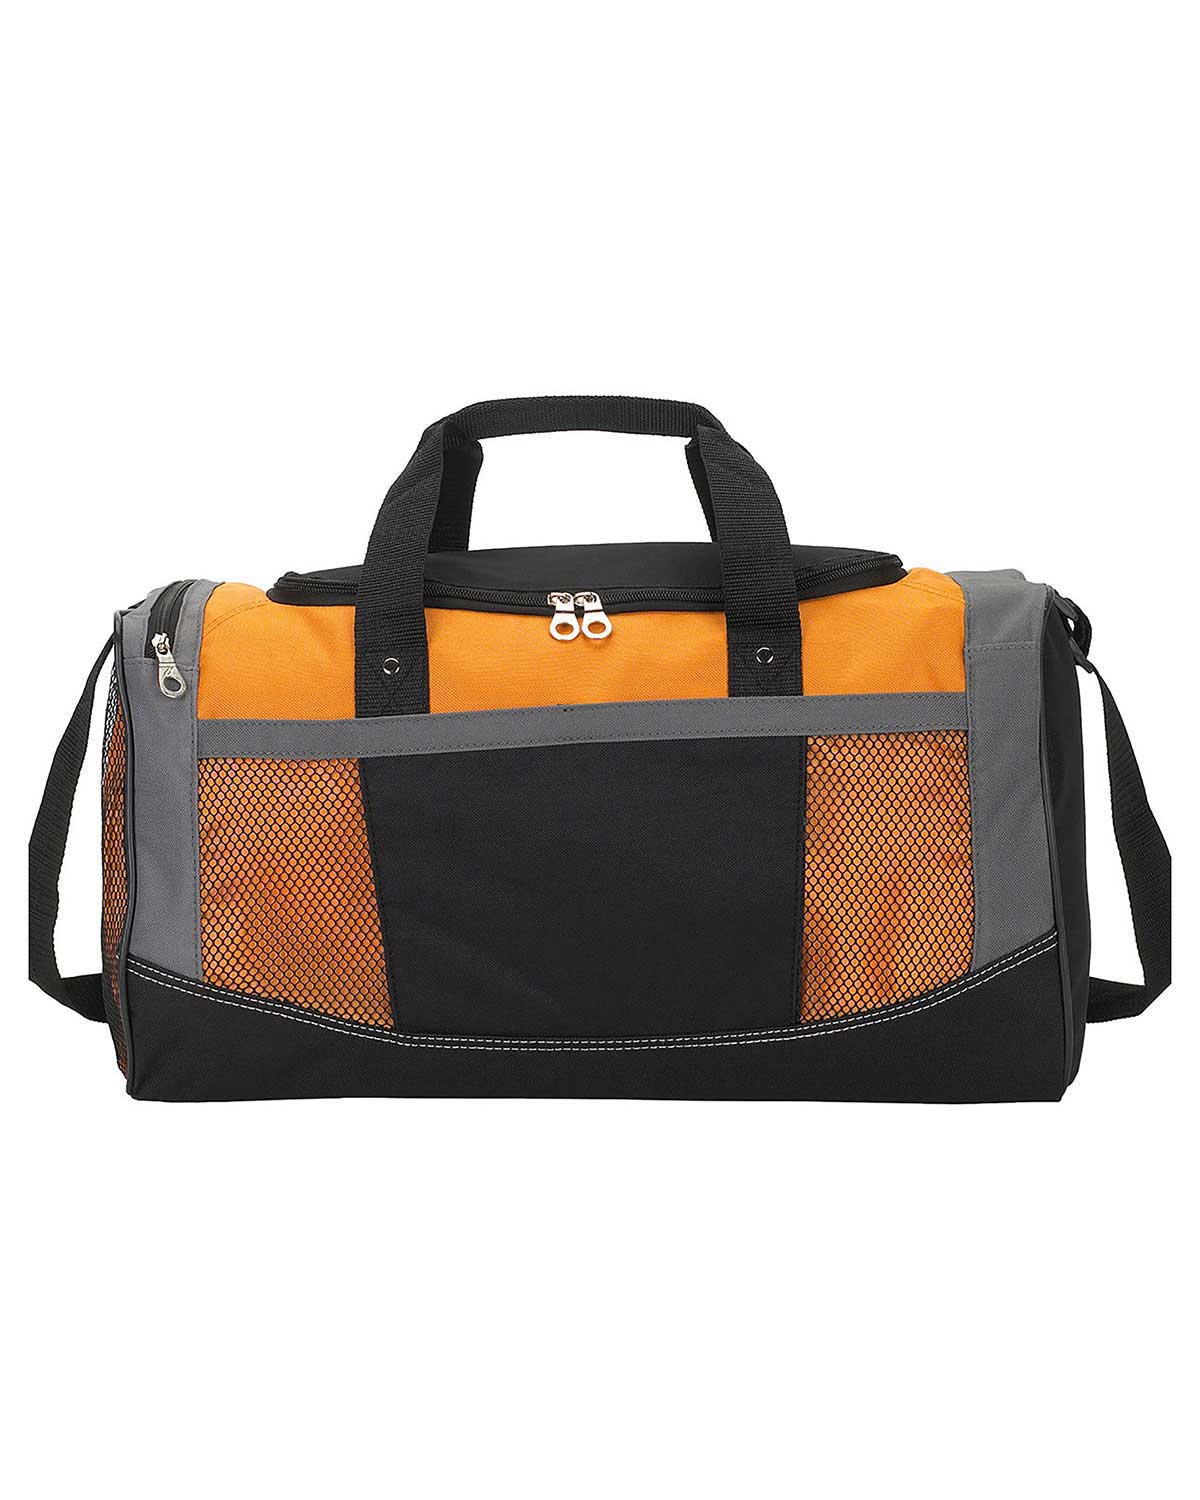 Gemline 4511 Unisex Flex Sport Duffle Bag at Apparelstation